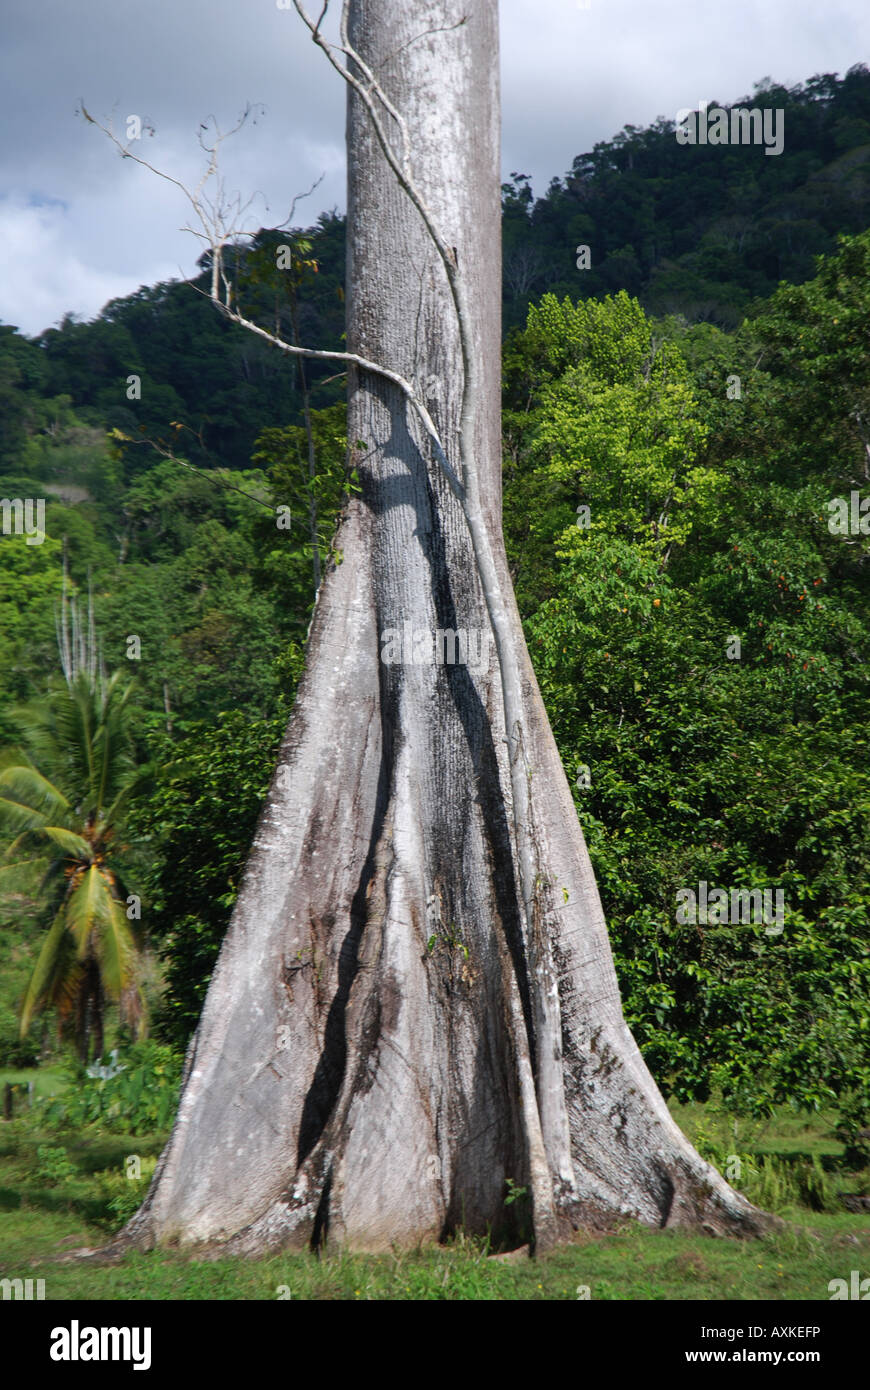 Trunk of Jicaro tree, Osa Peninsula, Costa Rica Stock Photo